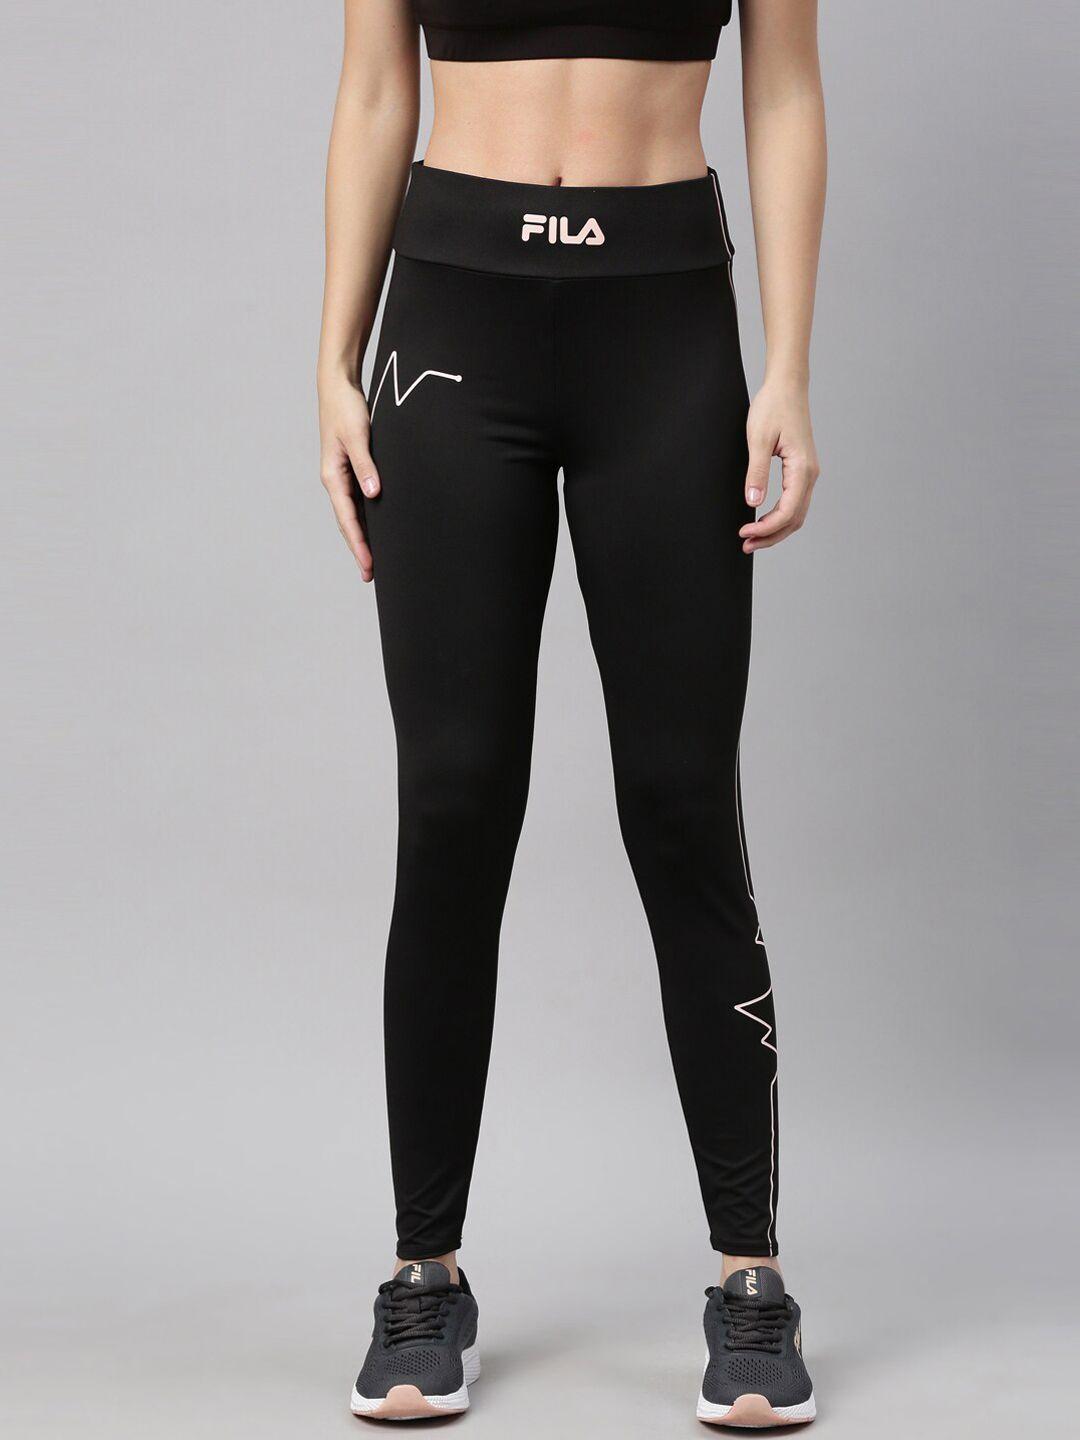 fila-women-black-solid-tights